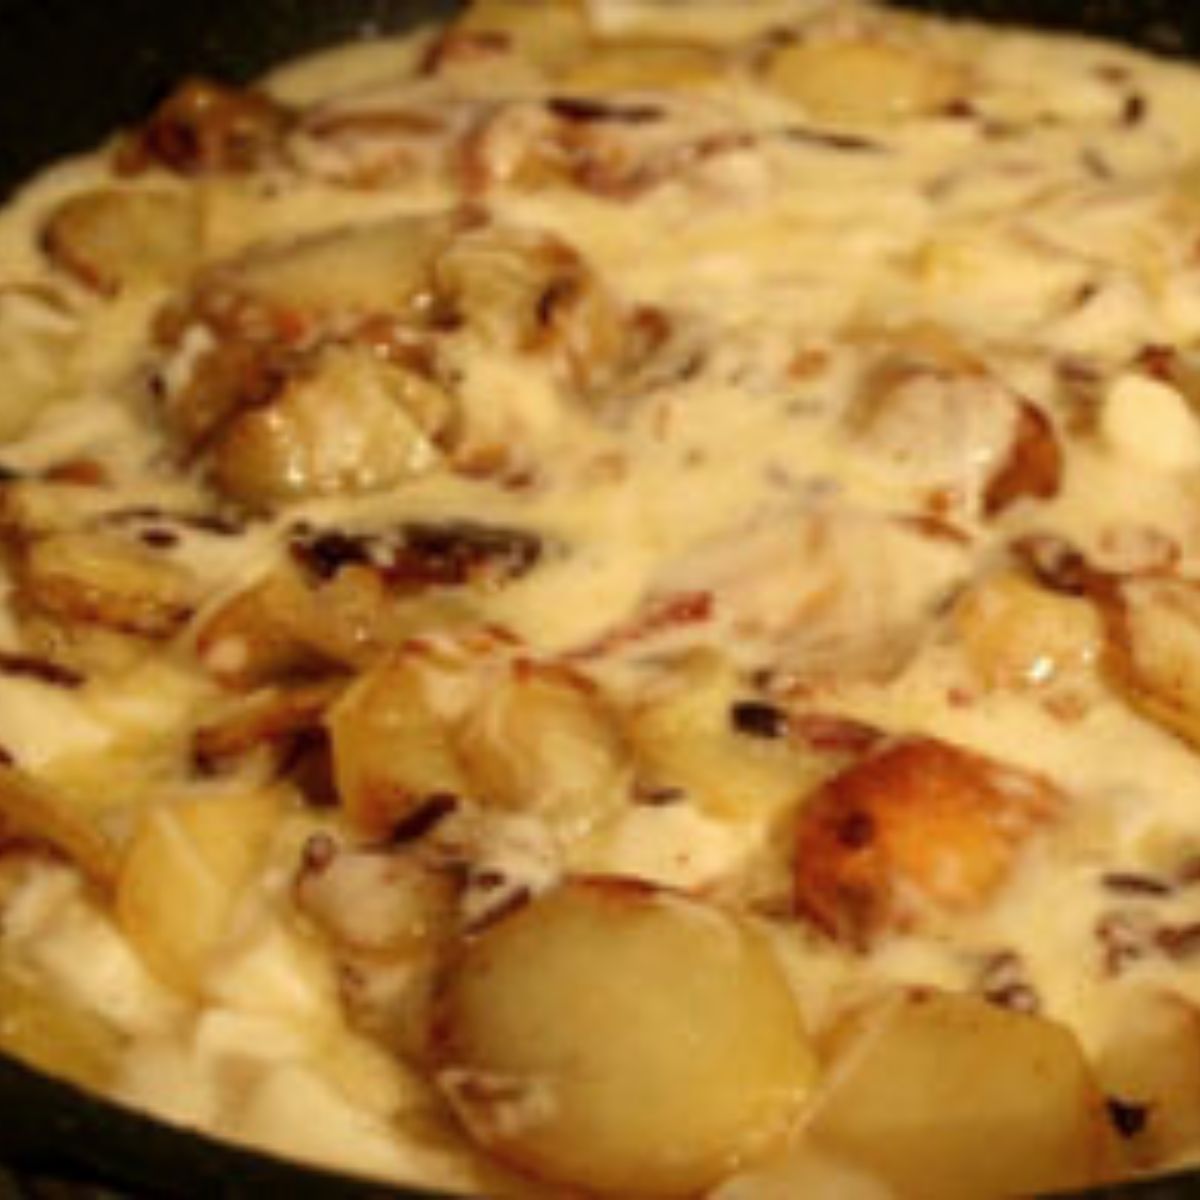 Truffade is a similar dish to scalloped potatoes